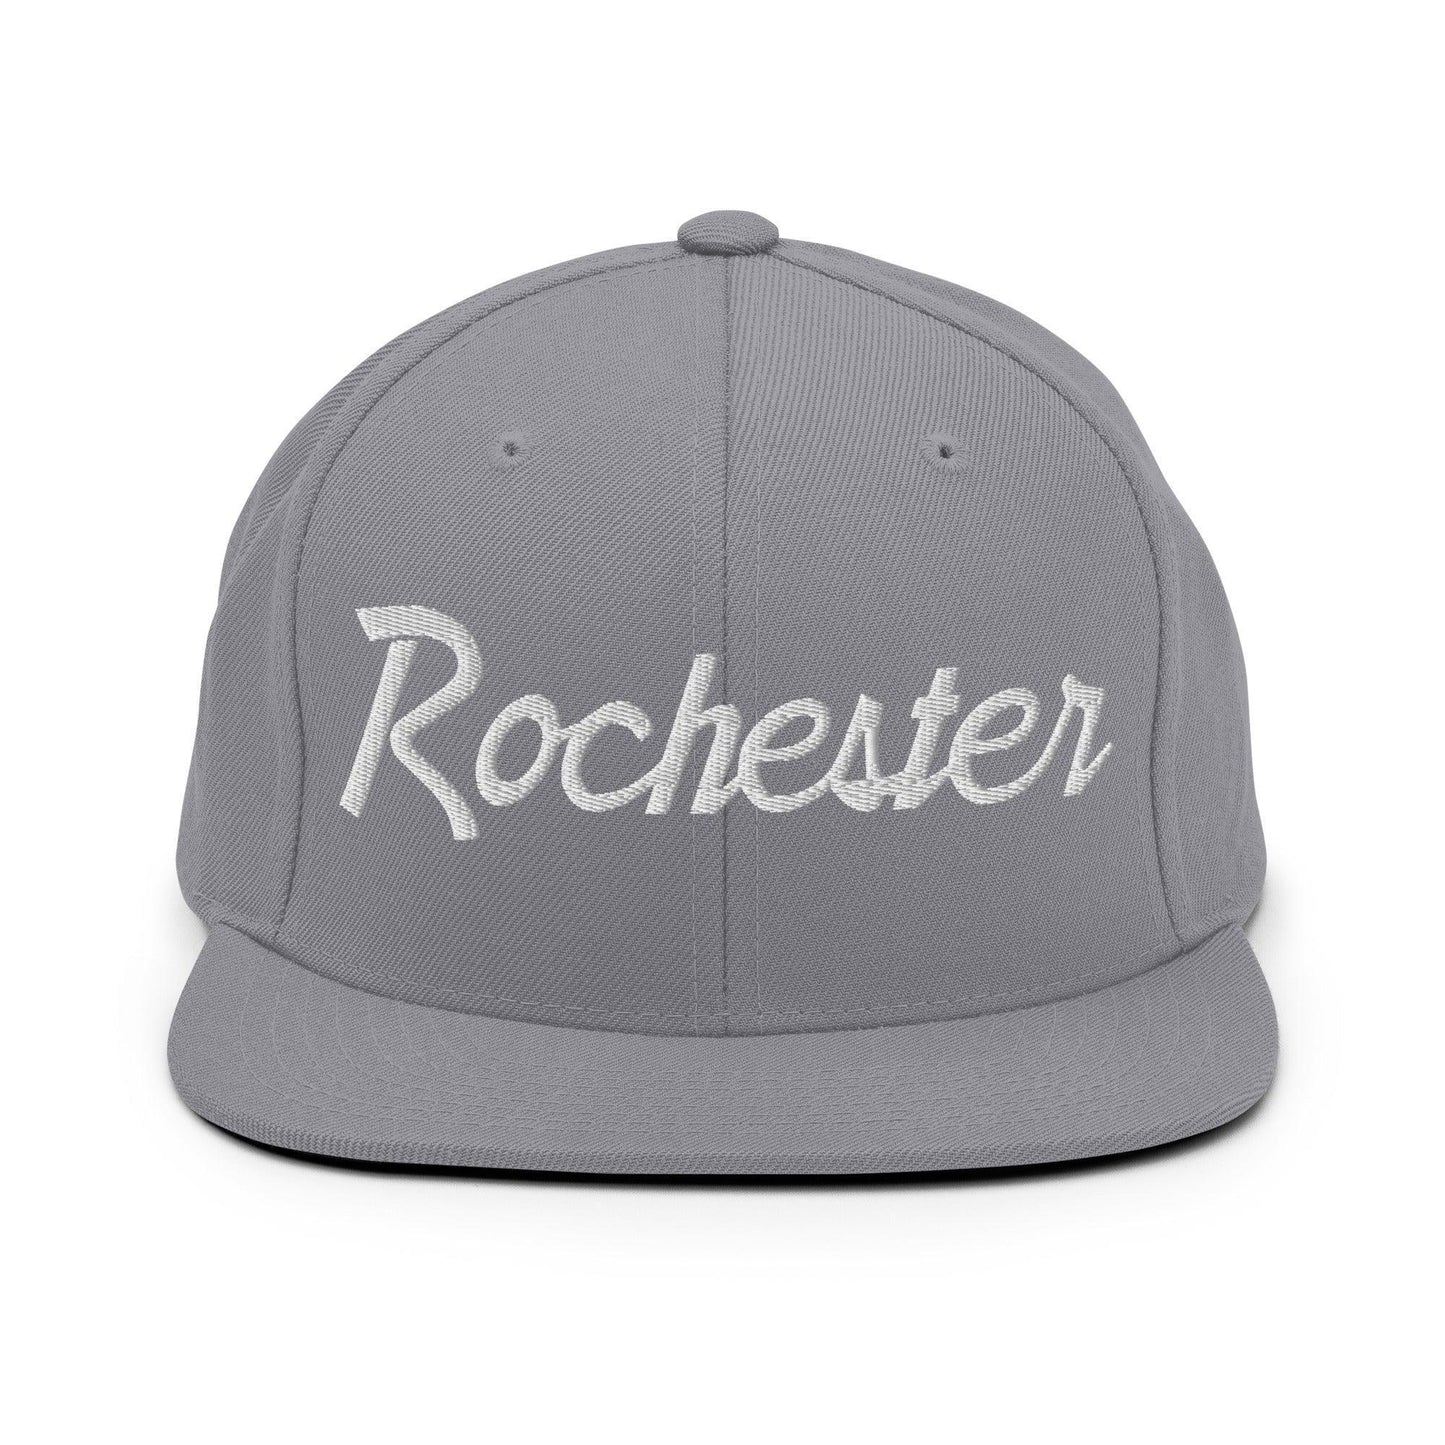 Rochester Script Snapback Hat Silver